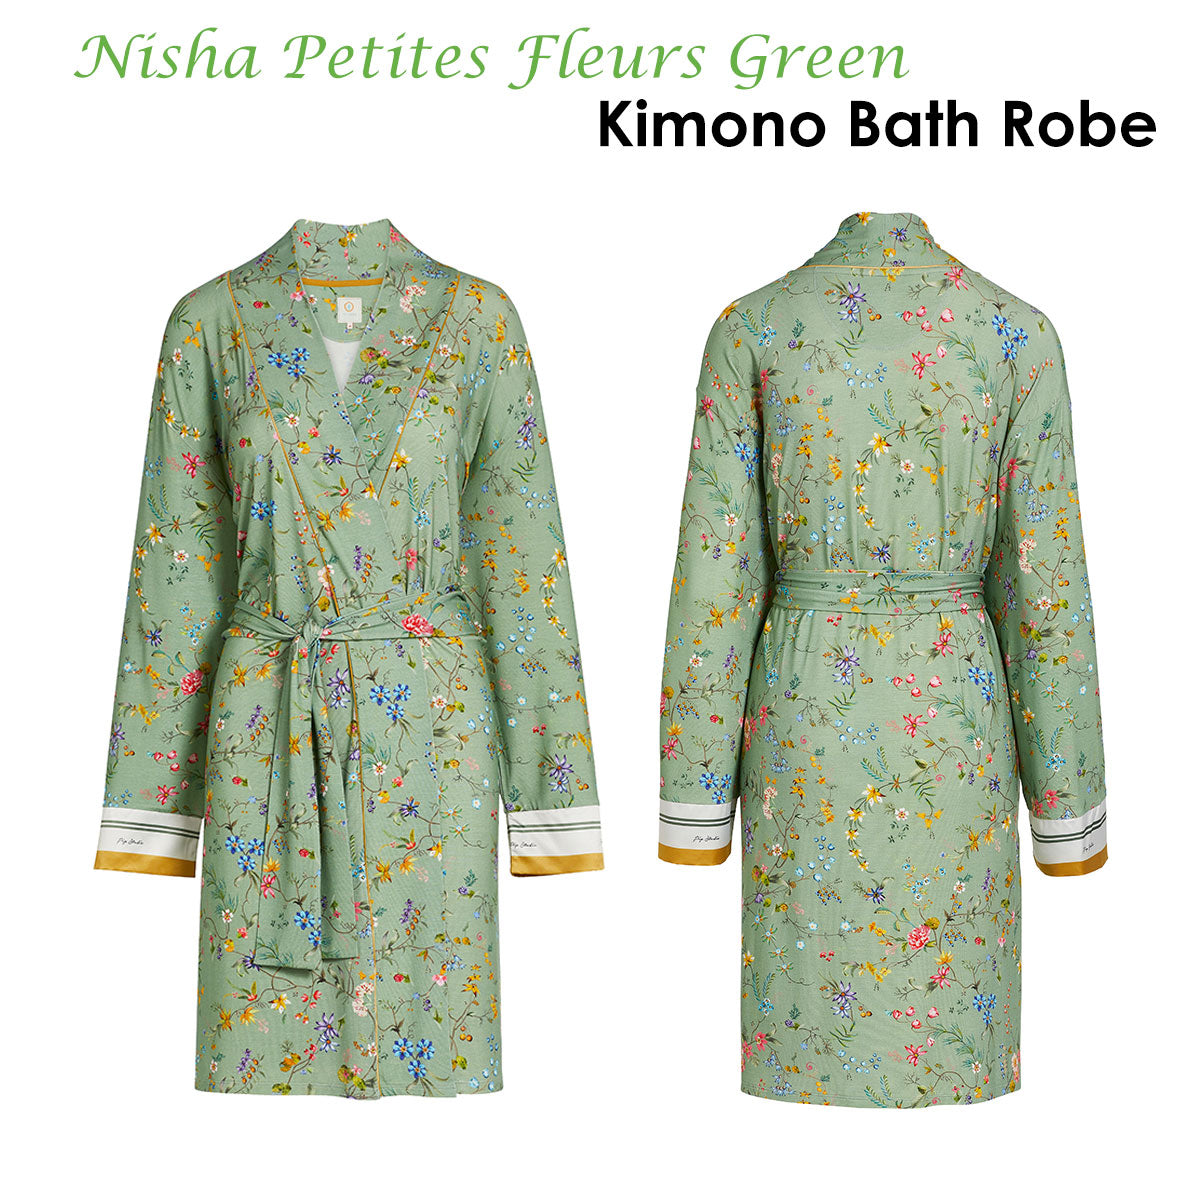 PIP Studio Nisha Petites Fleurs Green Kimono Bath Robe